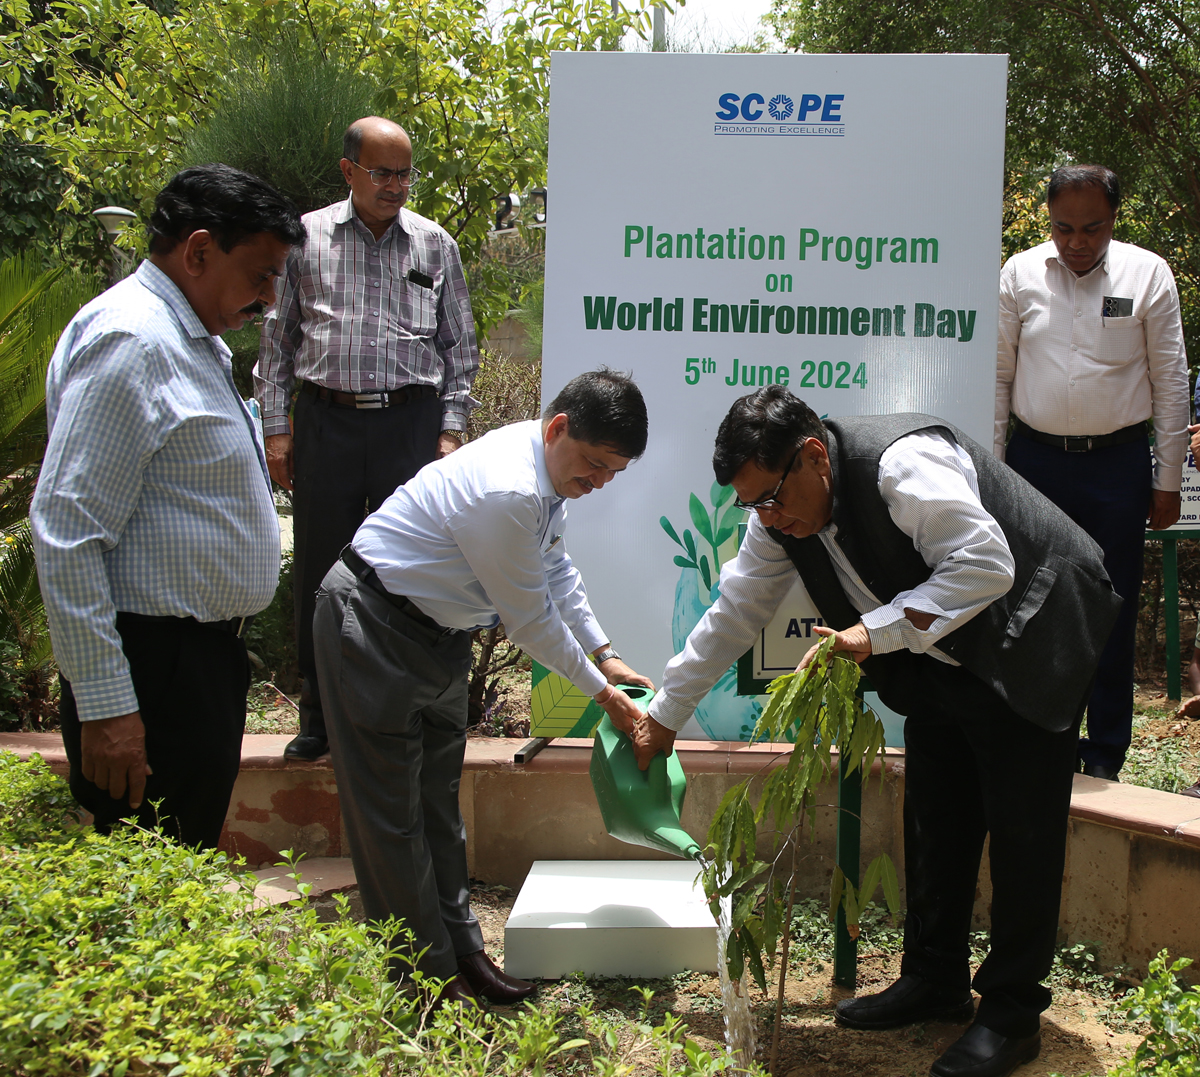 Plantation Program marks Environment Day at SCOPE